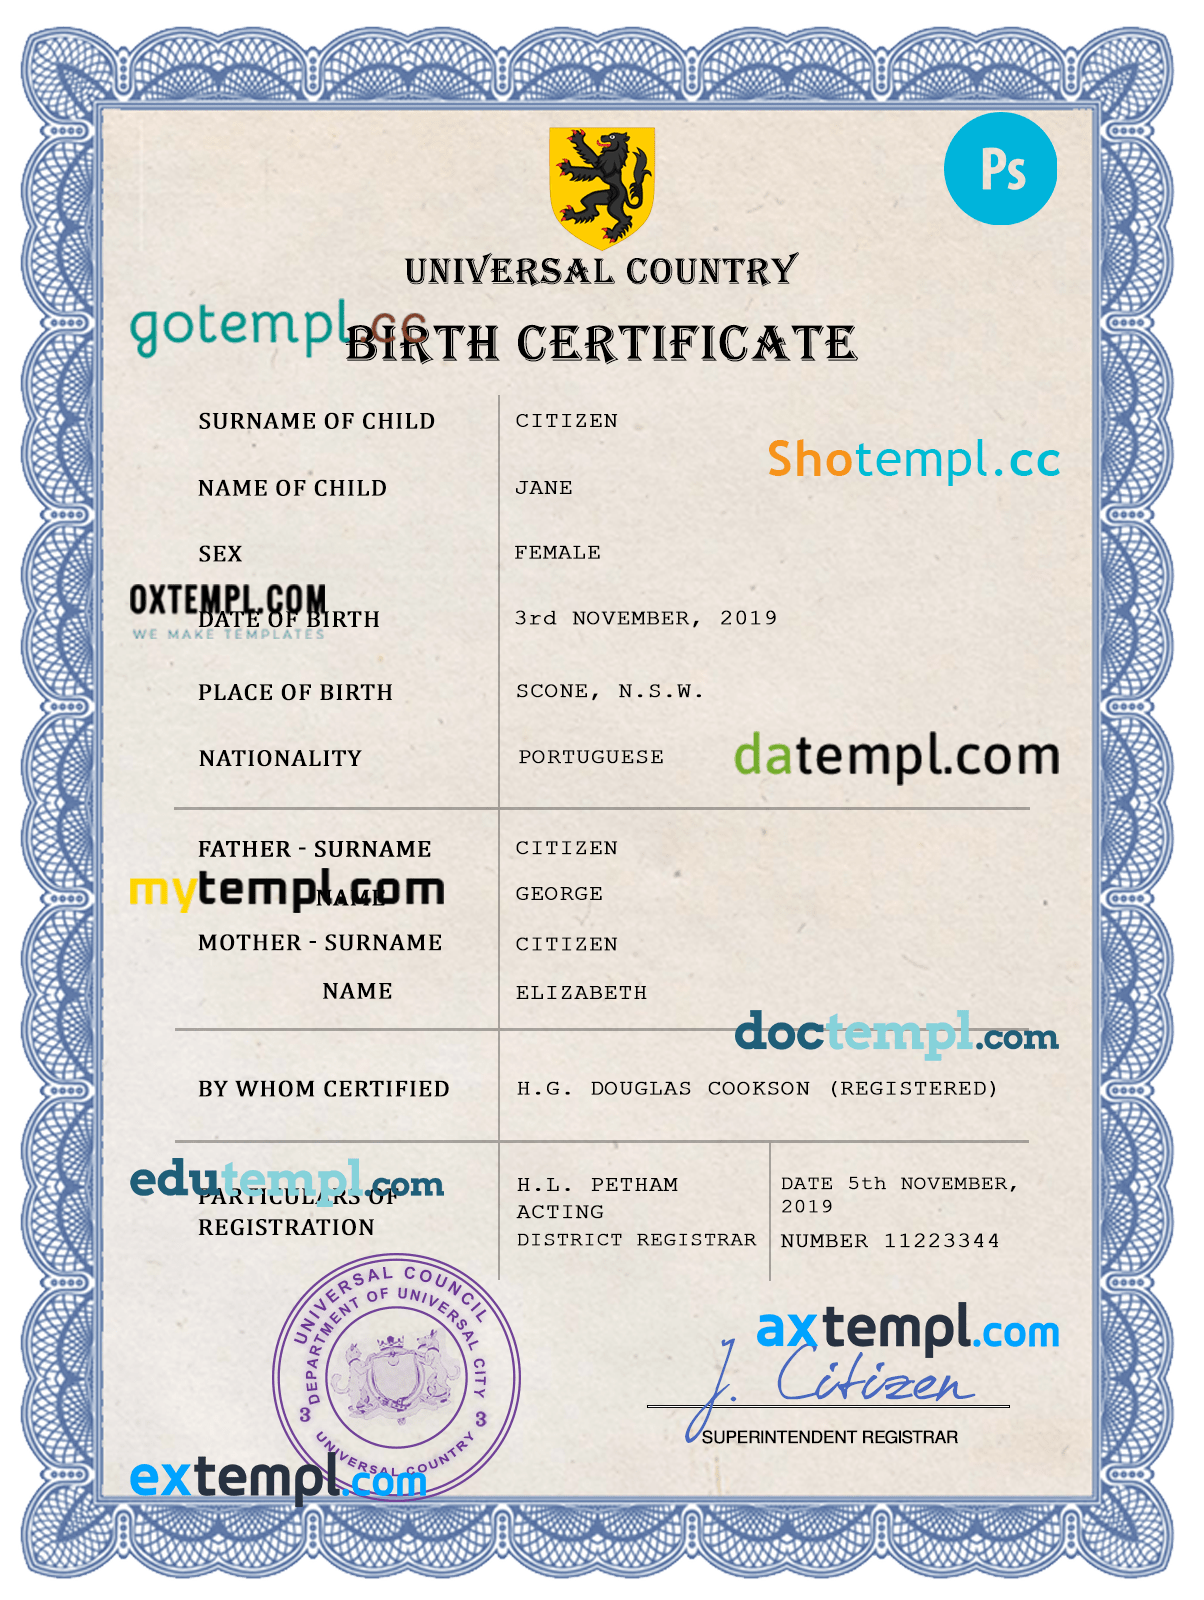 # prosper universal birth certificate PSD template, fully editable